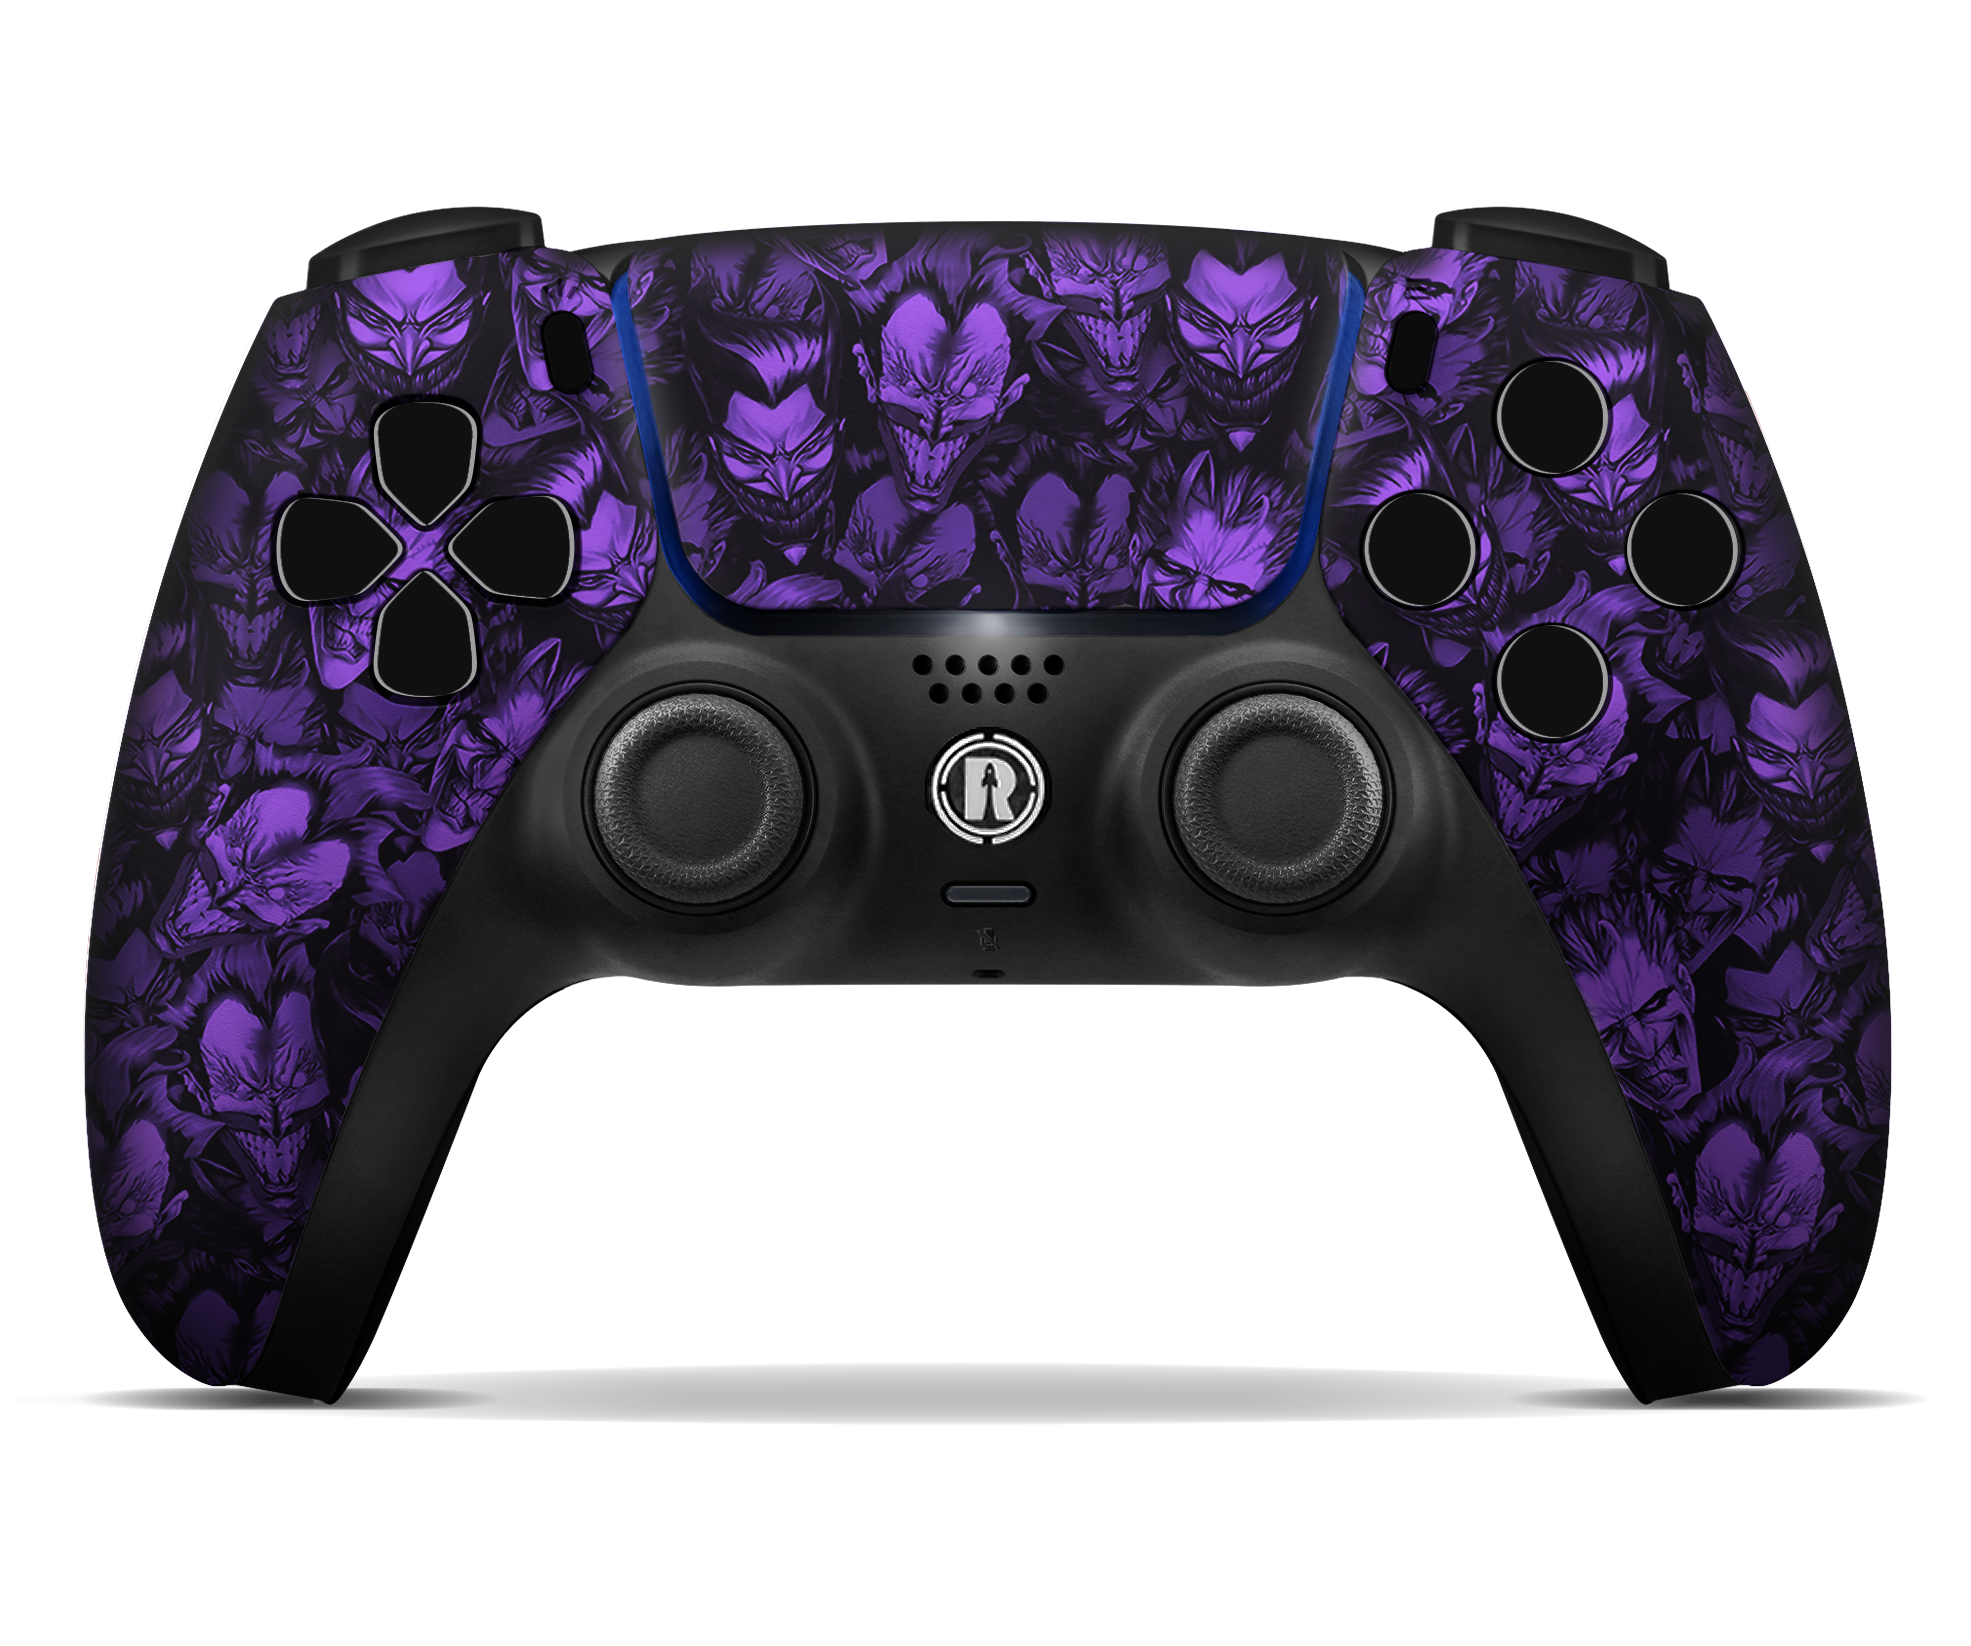 Joker Purple Edition Pro Max PS5 Rocket Controller